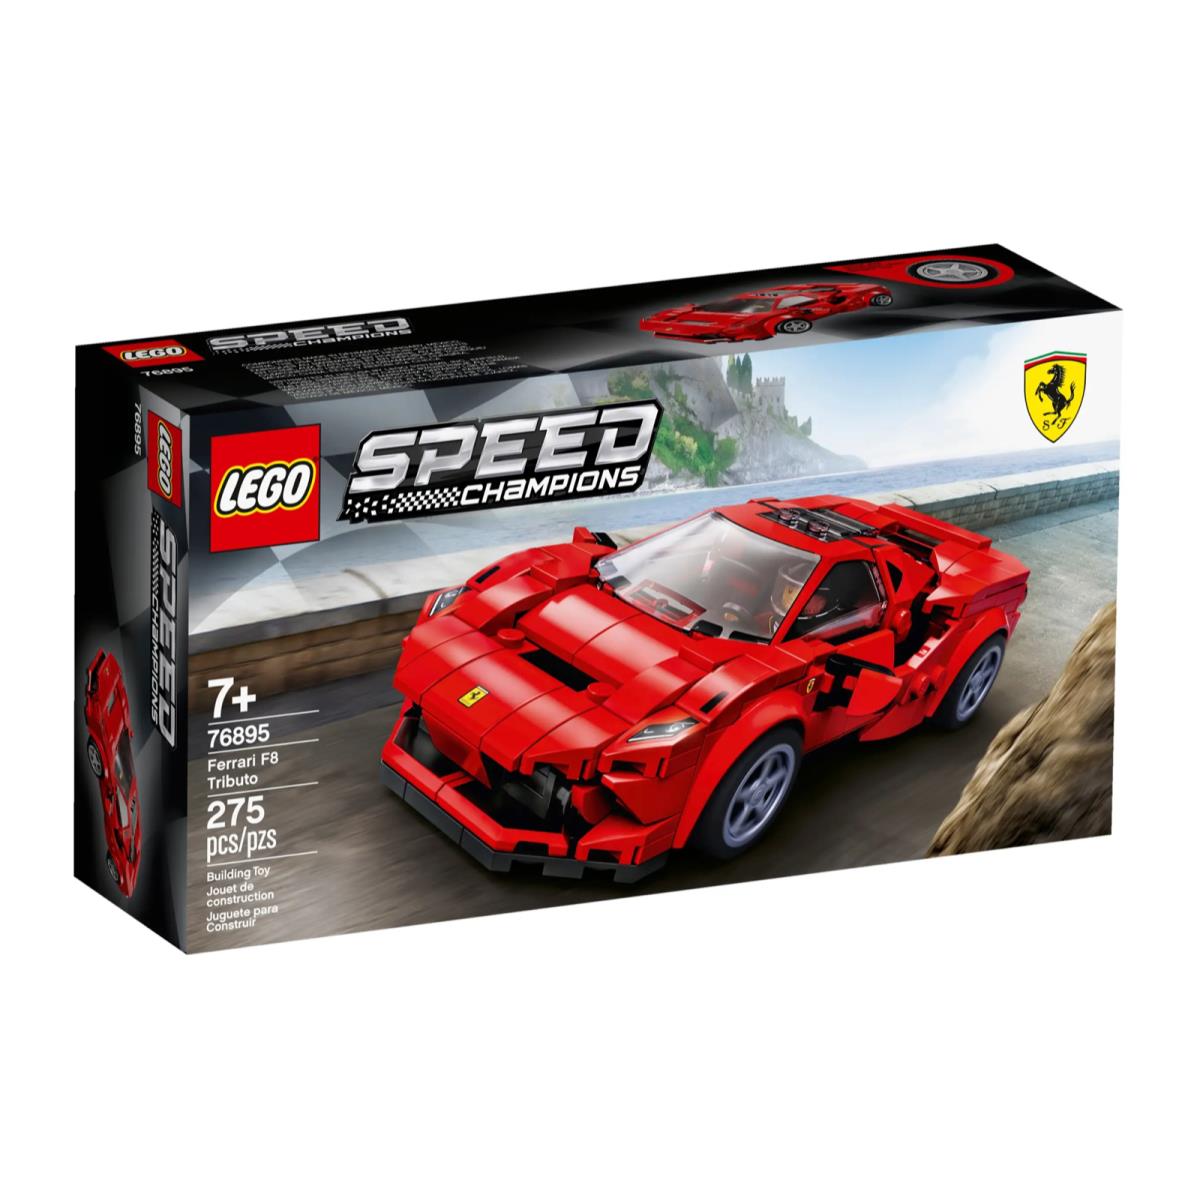 Lego 76895 Speed Champions Ferrari F8 Tributo Retired Set